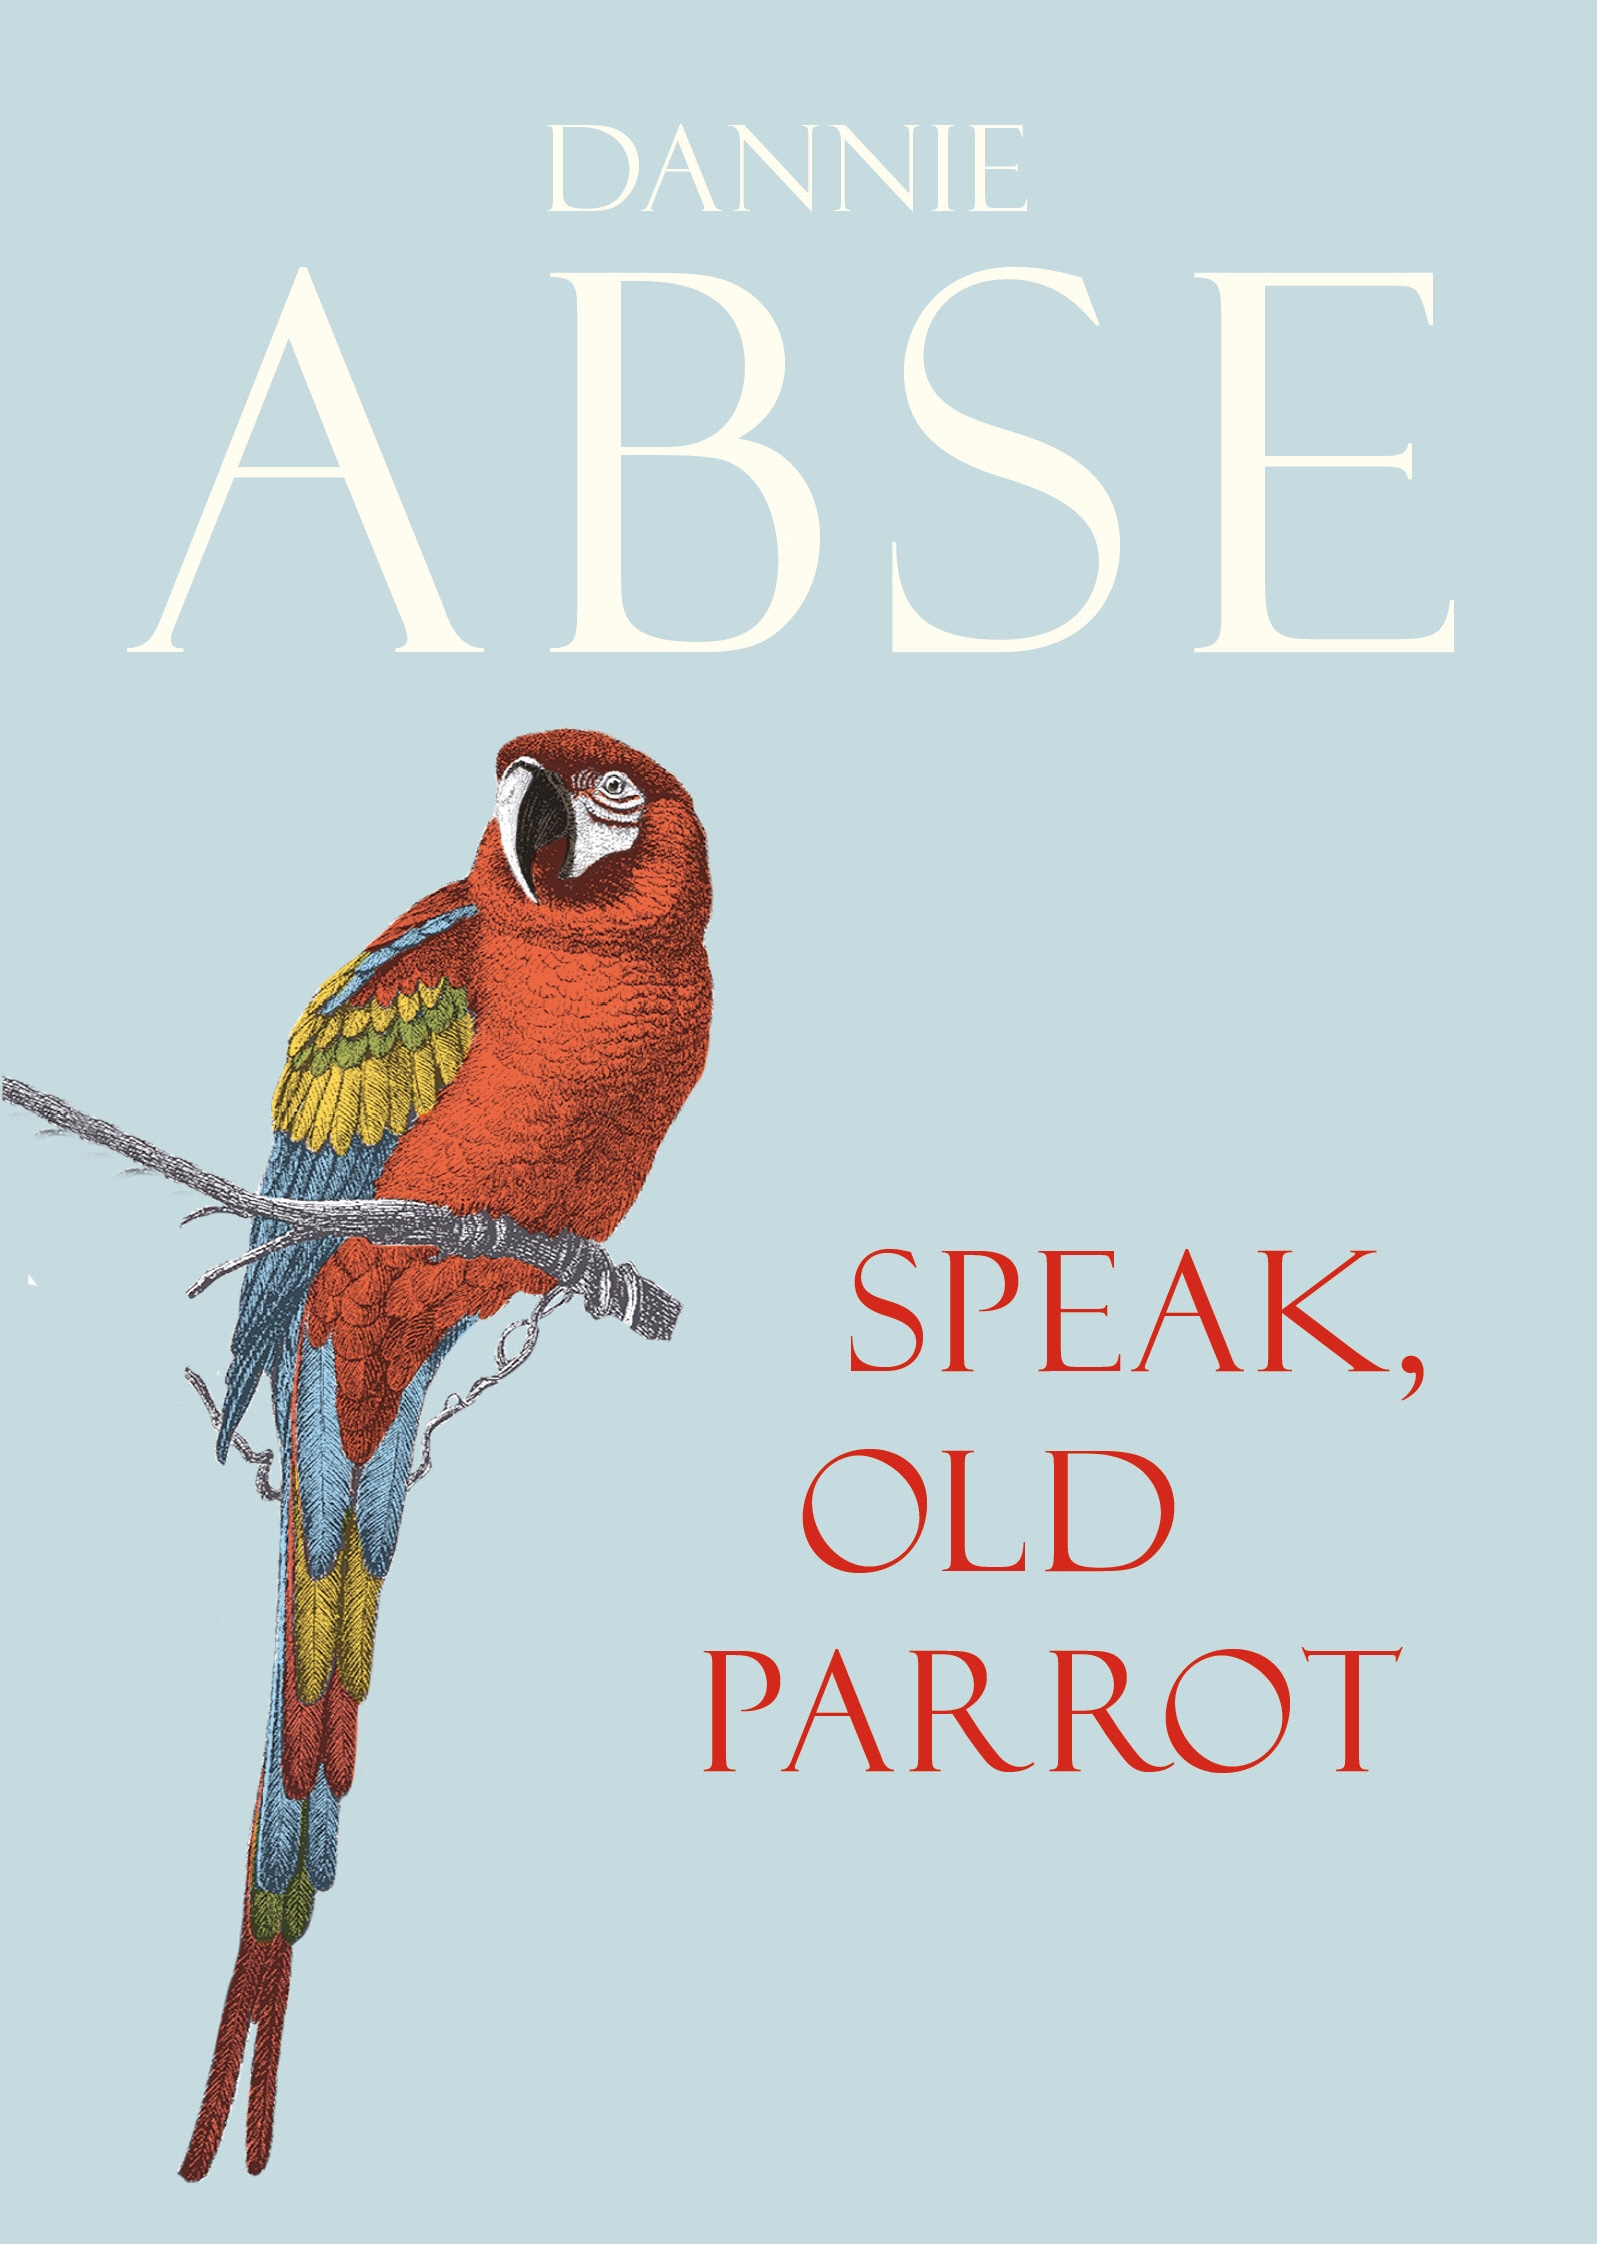 Book “Speak, Old Parrot” by Dannie Abse — November 28, 2019